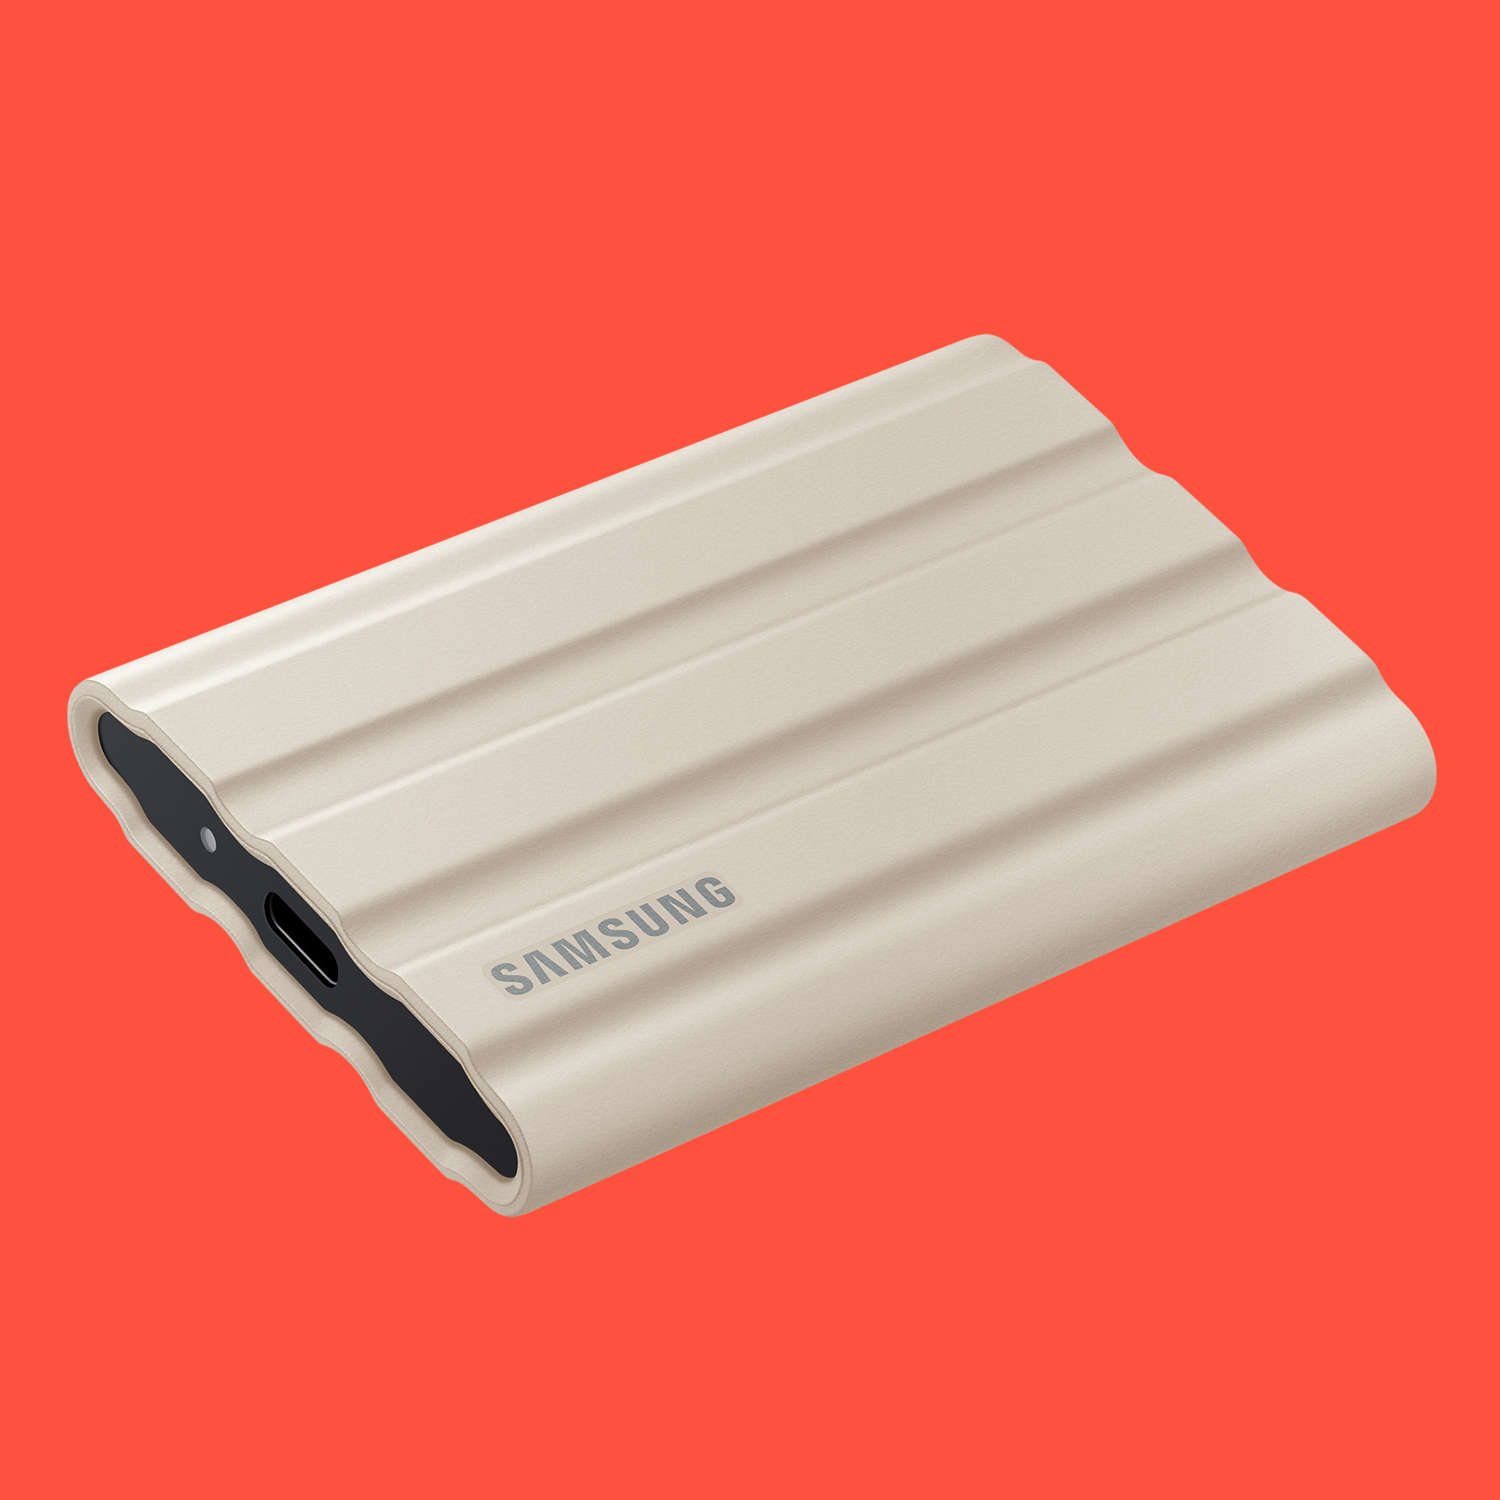 Samsung T7 Shield external SSD